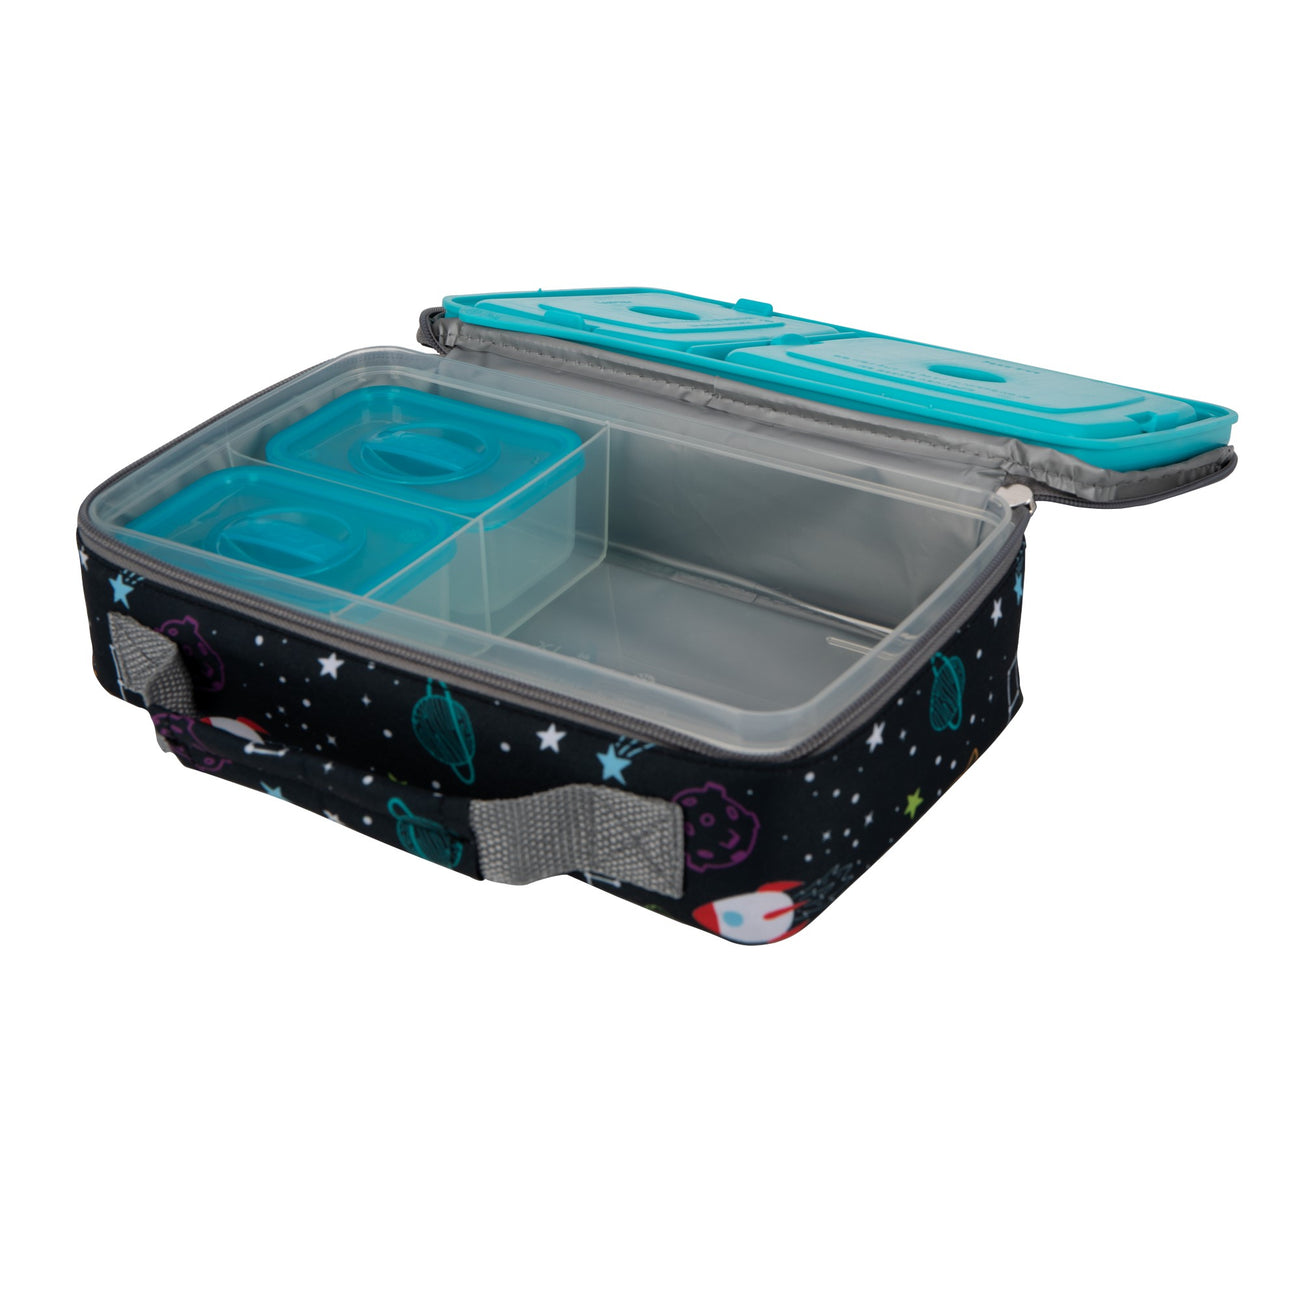 Insulated Bento Box Lunch Box